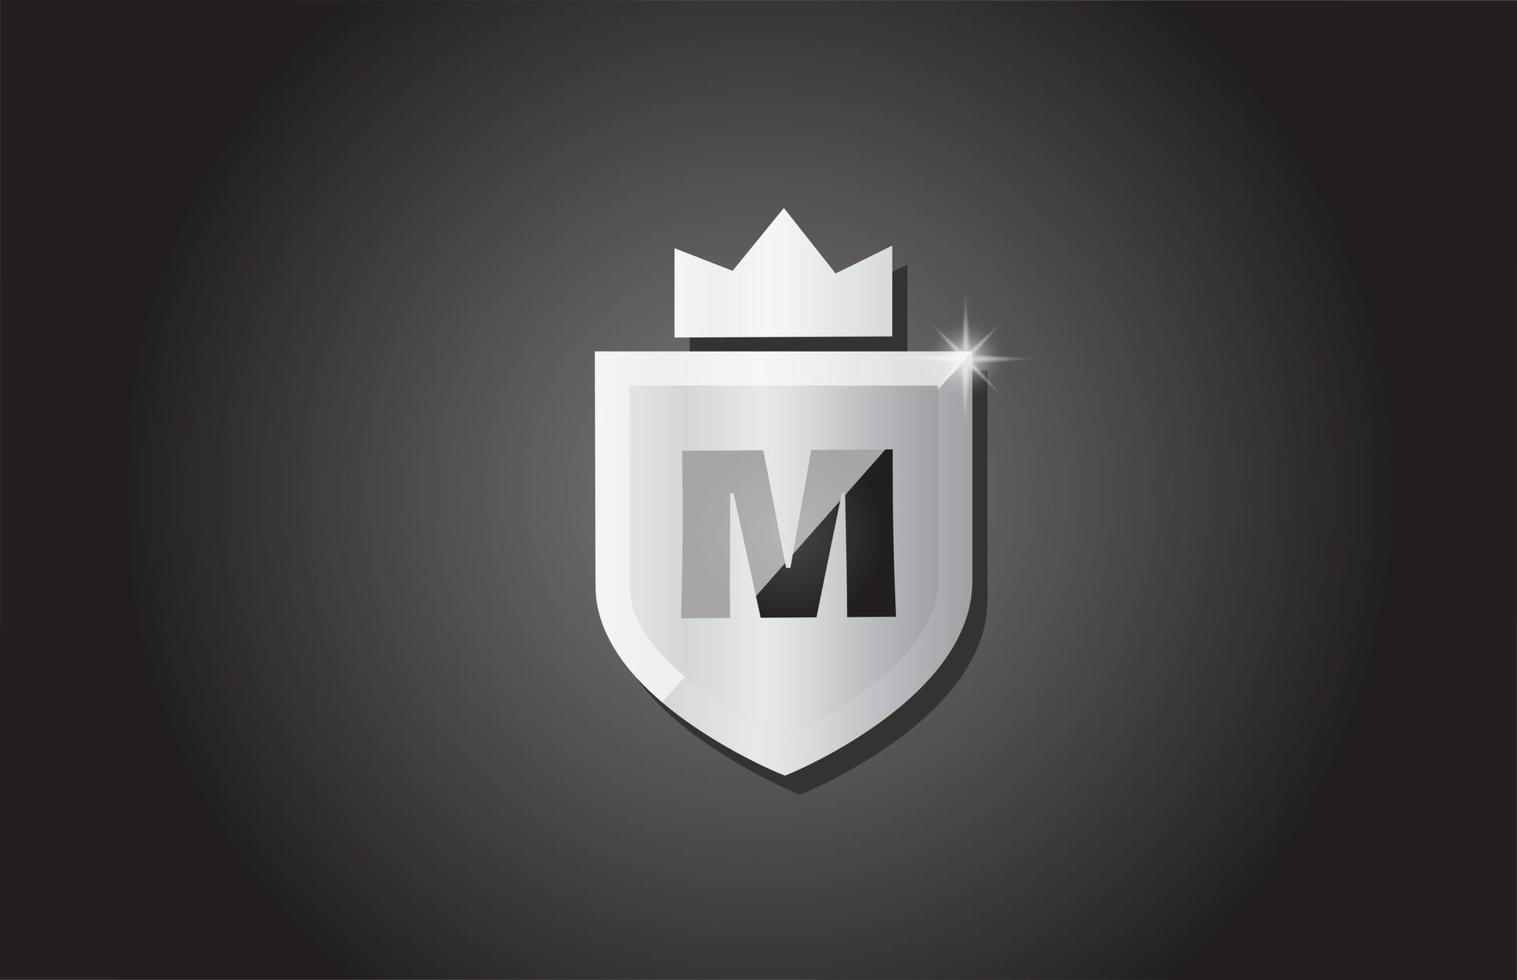 escudo criativo m logotipo do ícone de letra do alfabeto na cor cinza. design de negócios corporativos para identidade de modelo de empresa com coroa e faísca de luz vetor